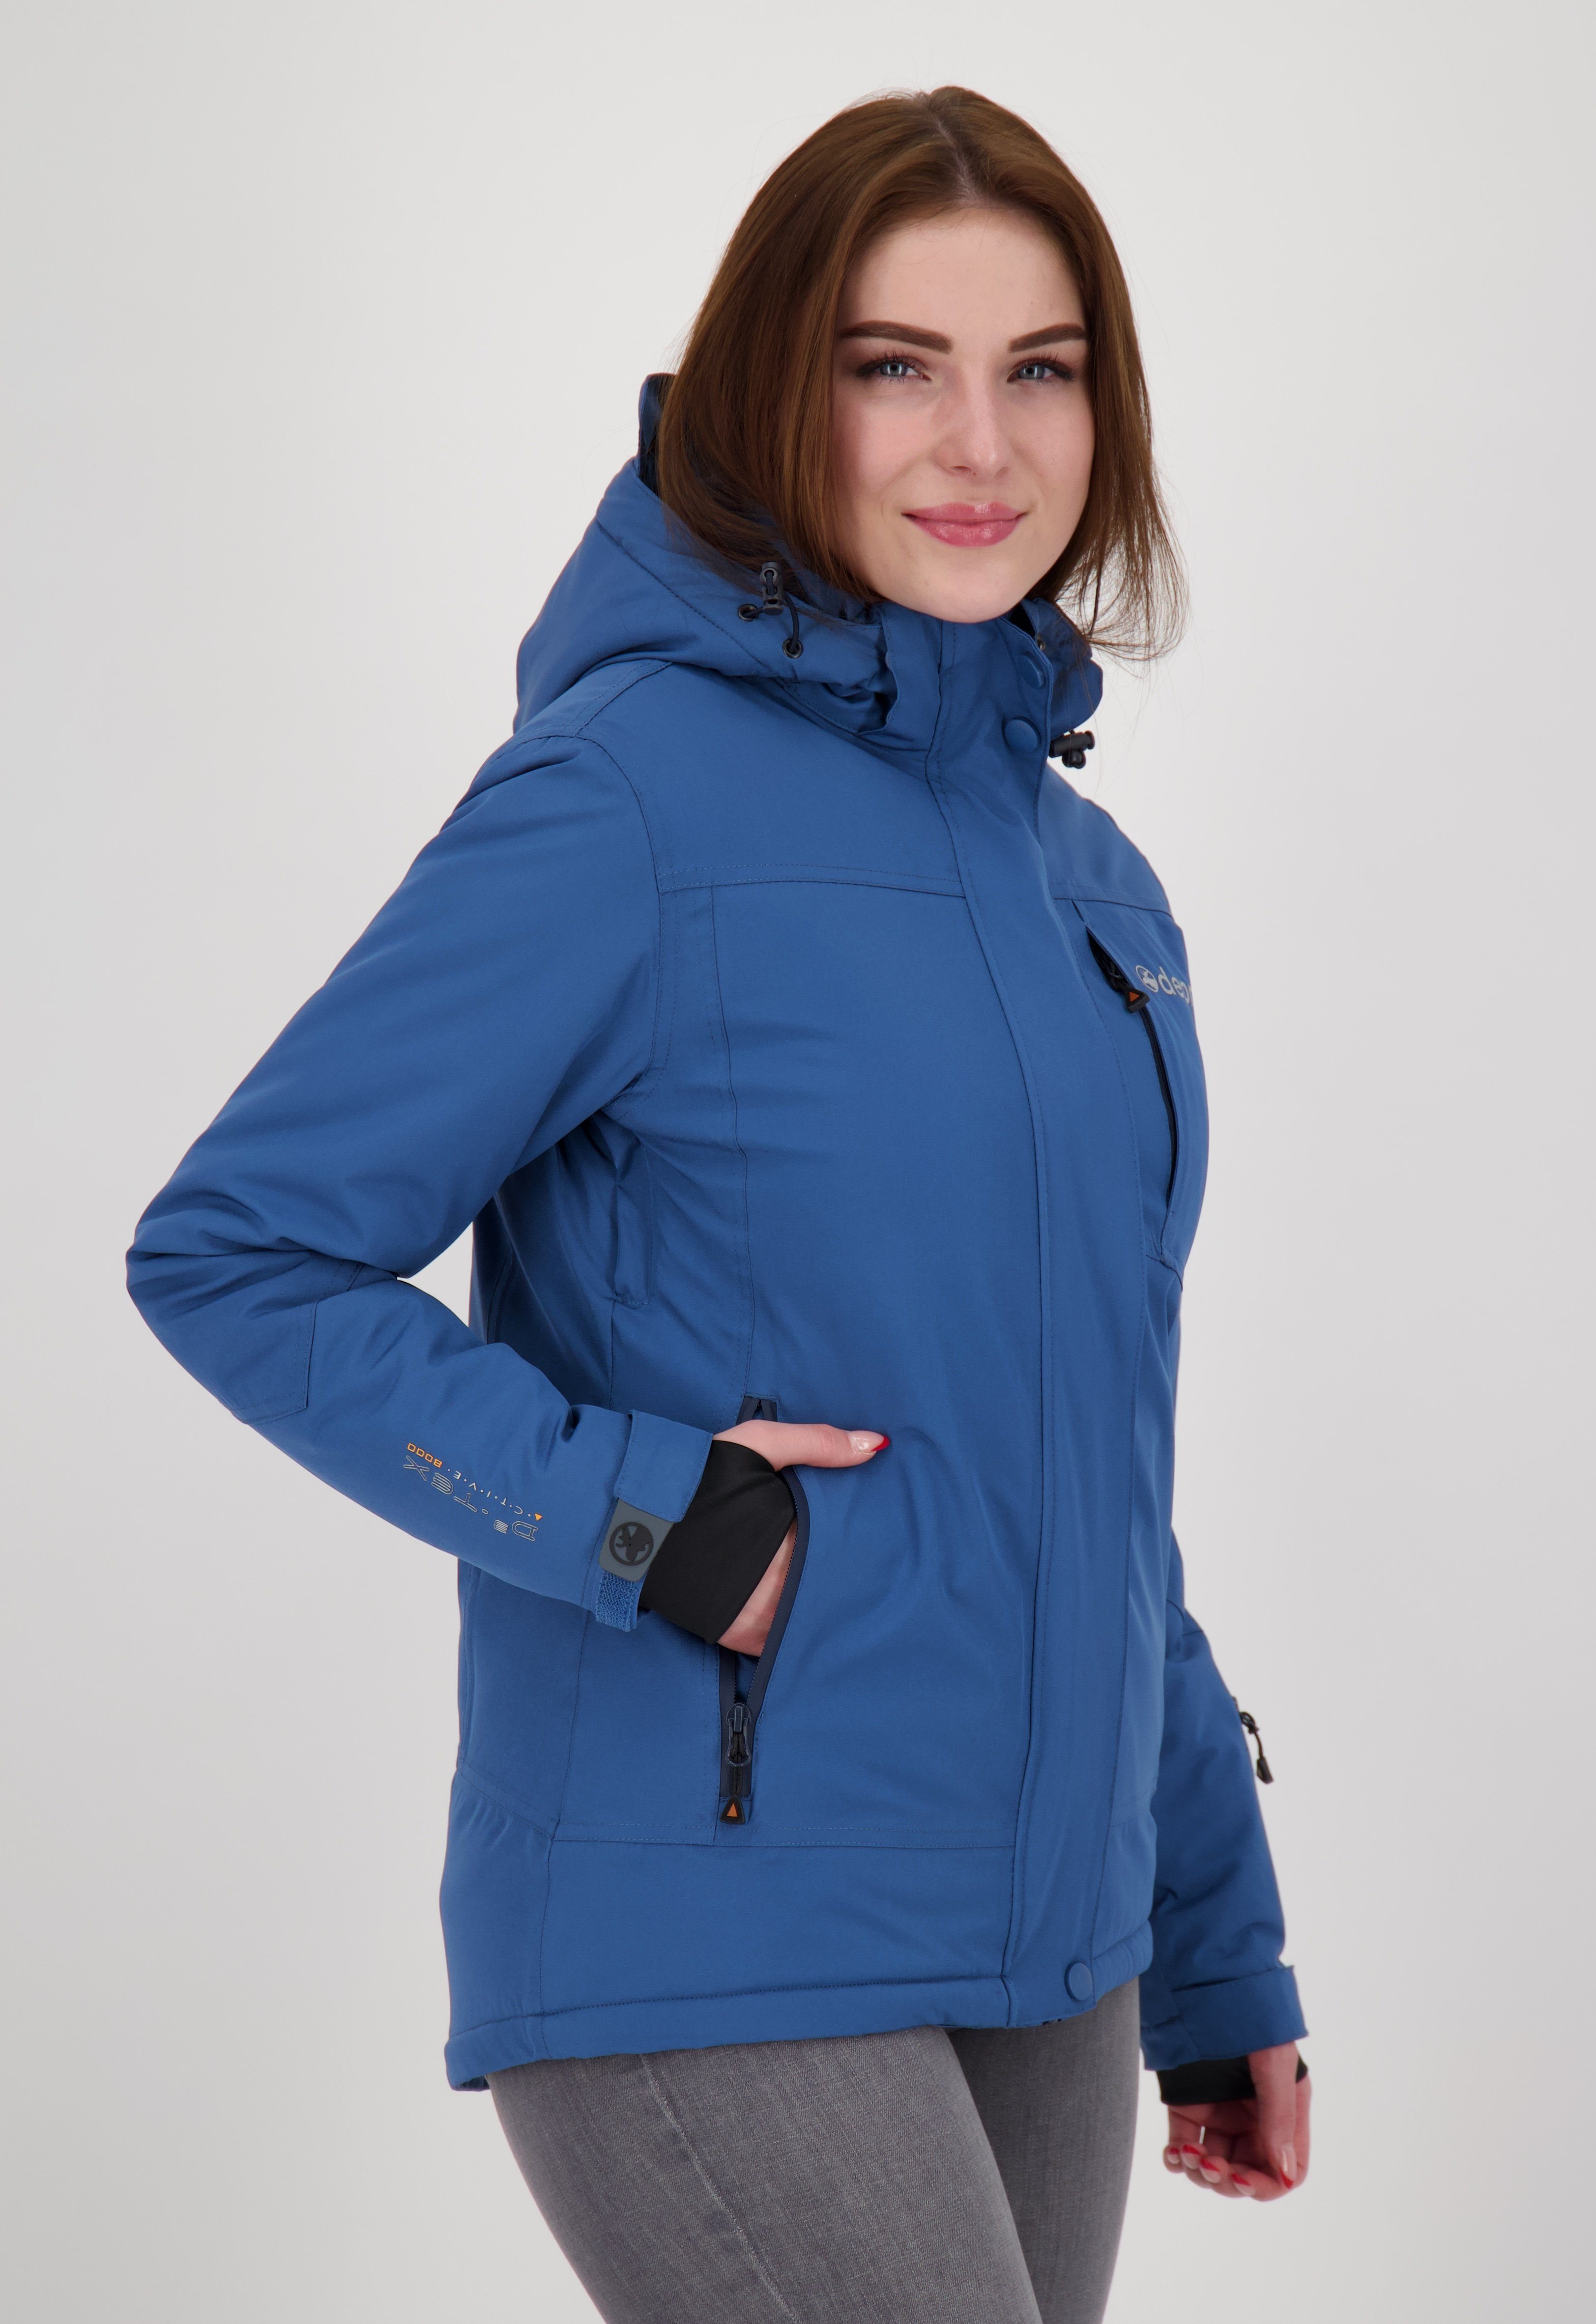 WOMEN herausnehmbarem NEW Winterjacke mit CS Windfang auch erhältich, Active blue MONTREAL in großen Größen DEPROC